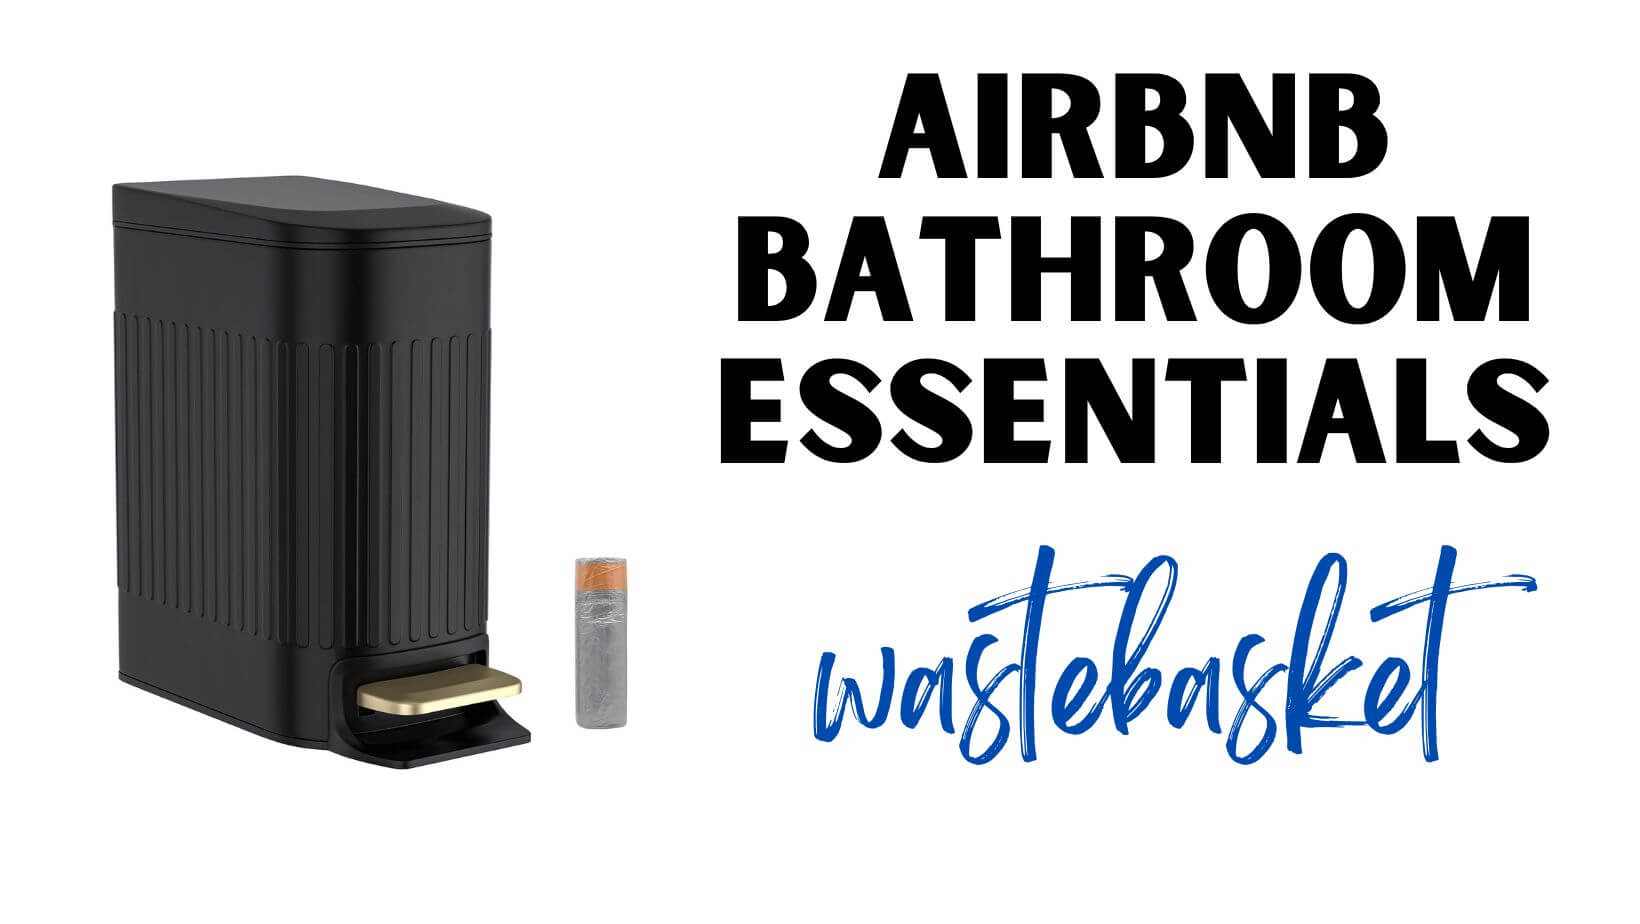 Airbnb Bathroom Essentials Wastebasket